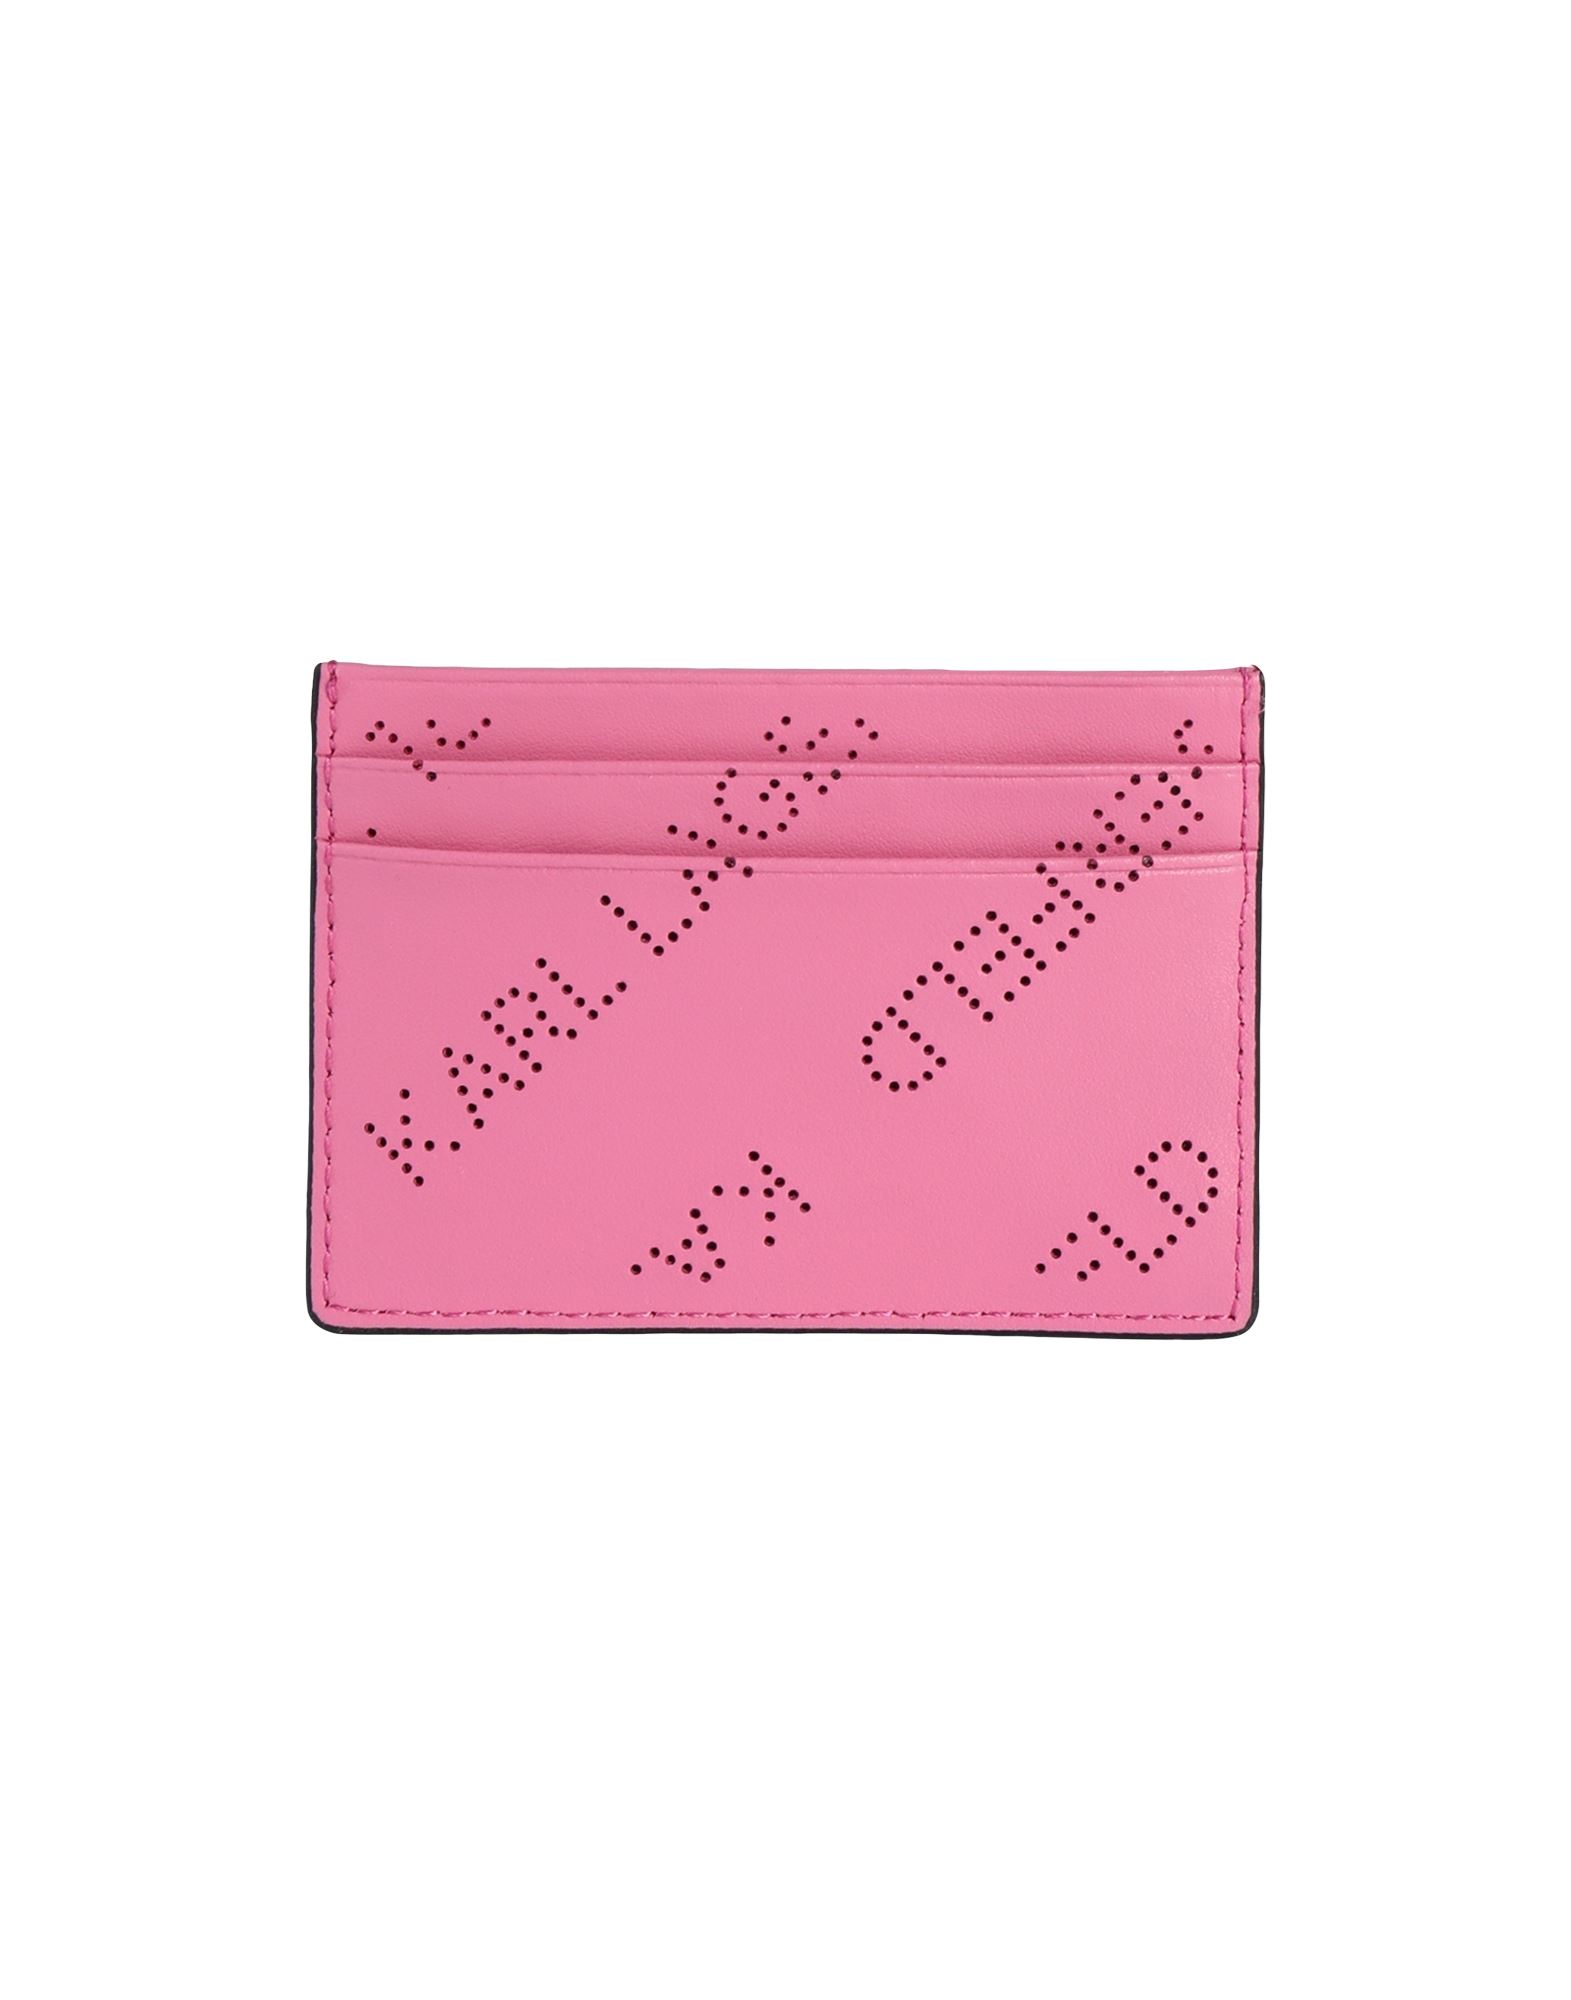 Karl Lagerfeld Document Holders In Pink